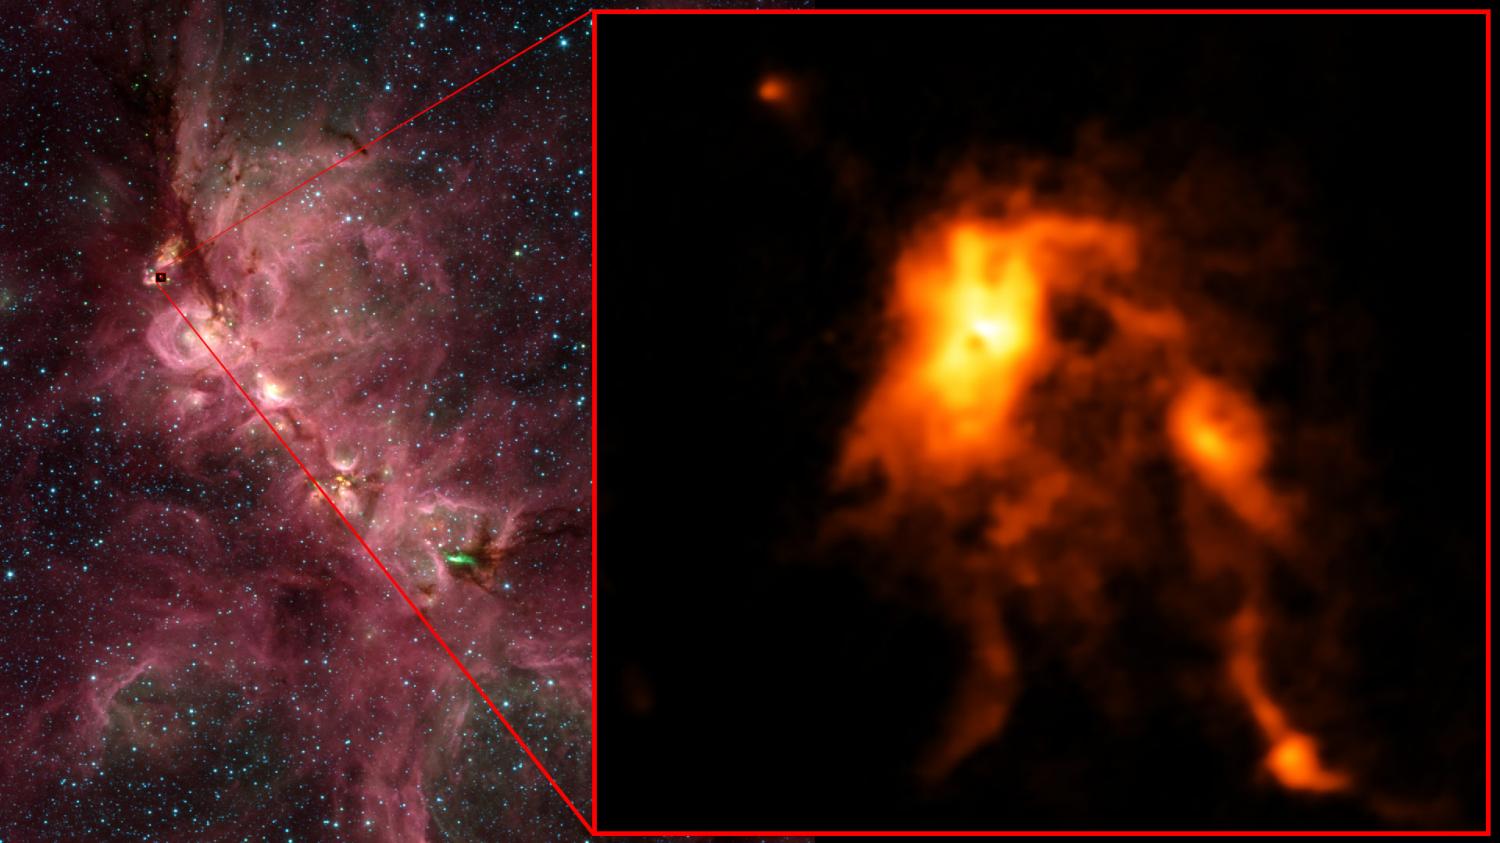 Protostar blazes bright, reshaping its stellar nursery.